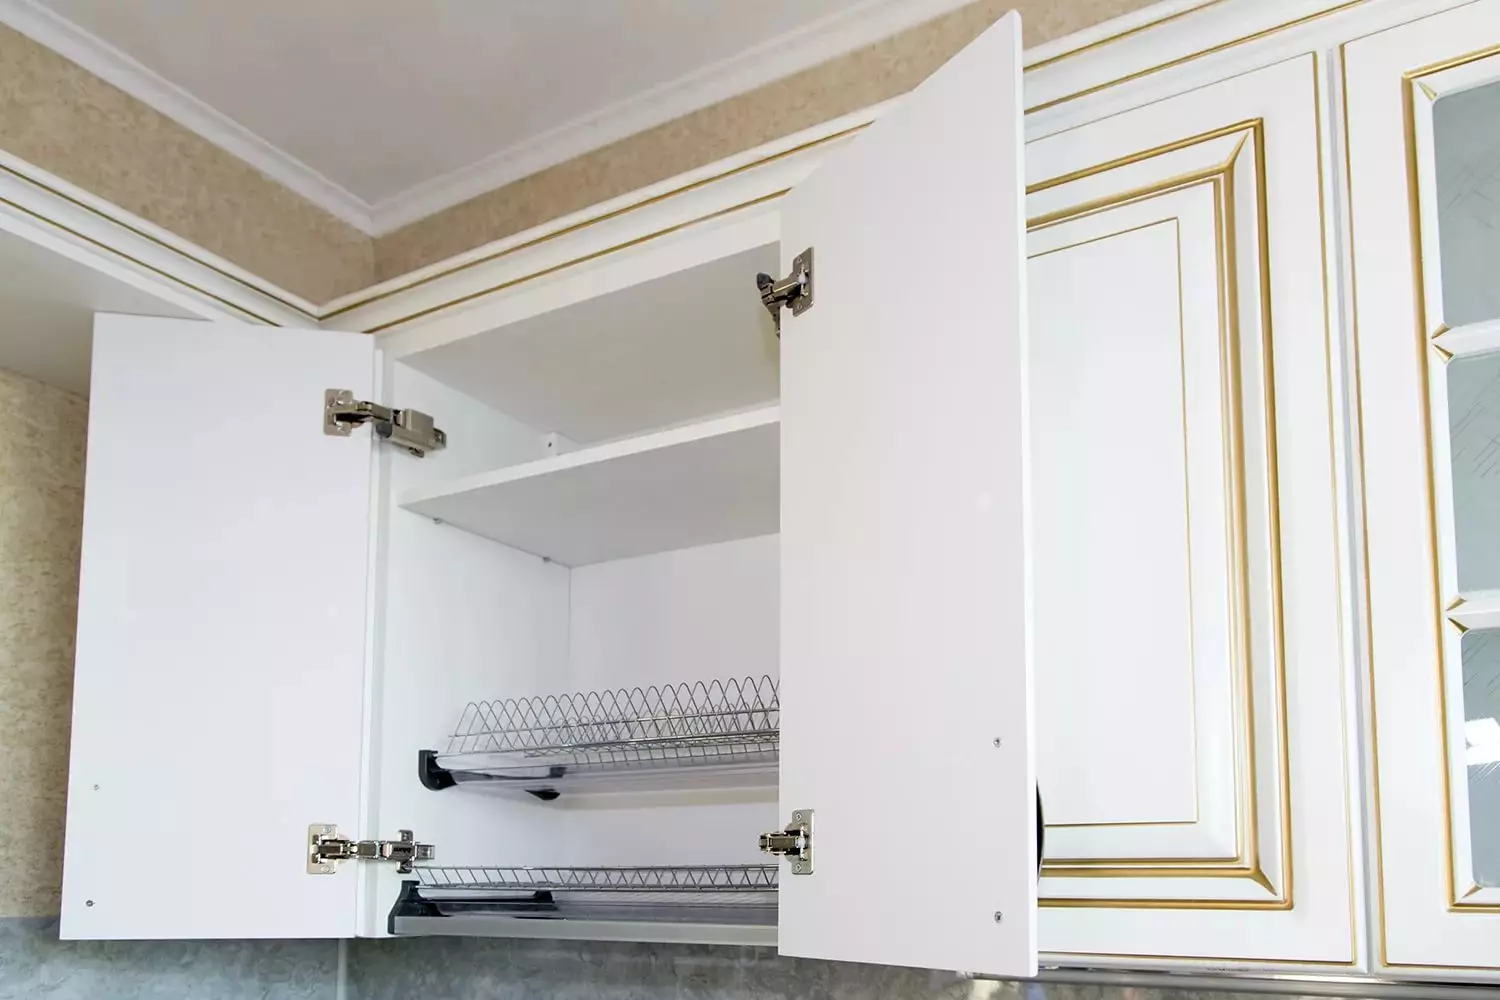 Keuken hinged Corner Cabinet (34 foto's): Over Oersjoch): Over Oersjoch of the Upper G-Shaped Cabinets, seleksje tips 20951_25